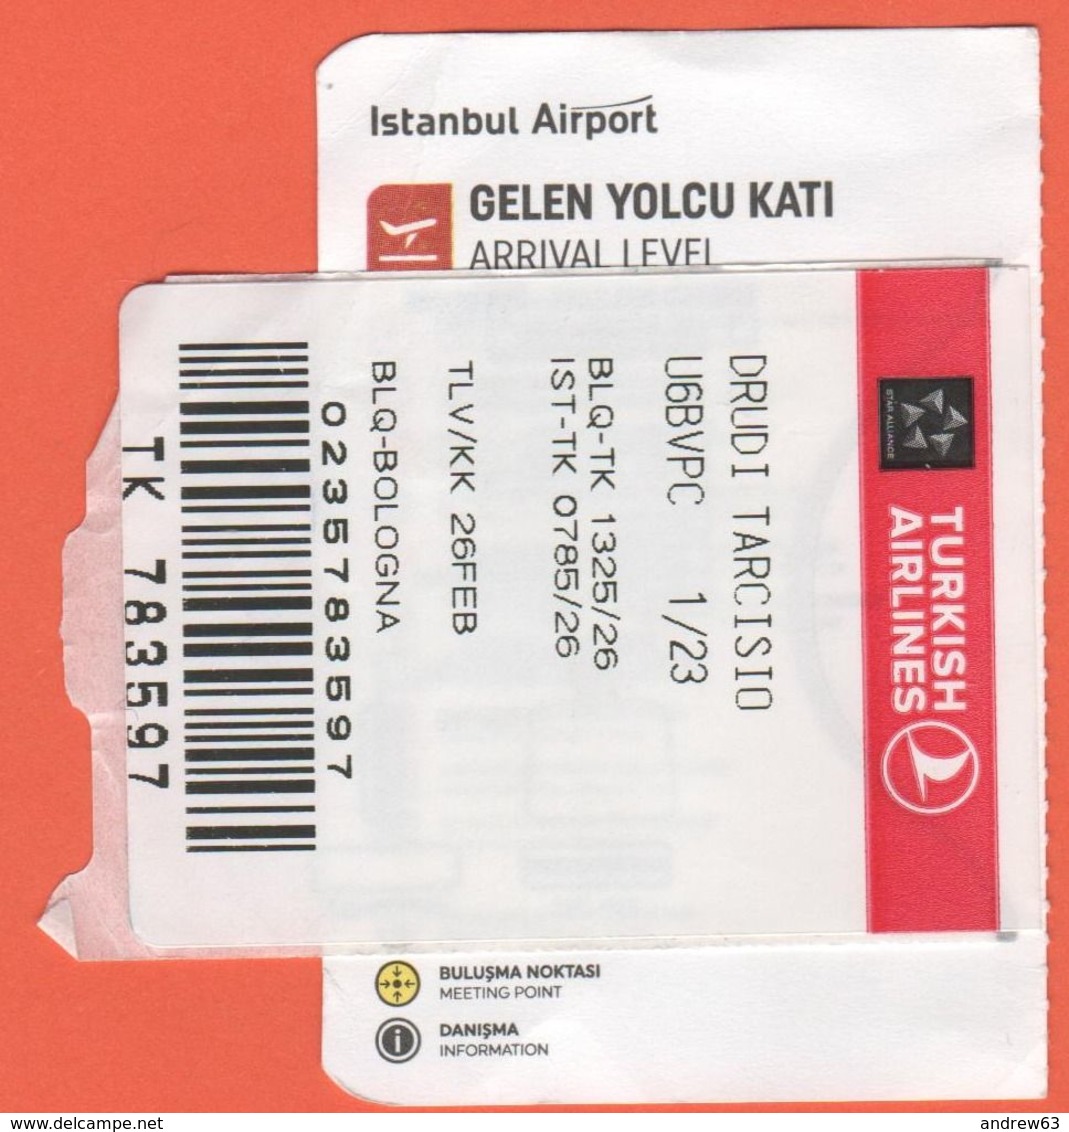 TURKISH AIRLINES - 2020 - BOARDING PASS - BİNİŞ KARTI - TK 1325 - IST-BLQ - Istanbul-Bologna - Mondo